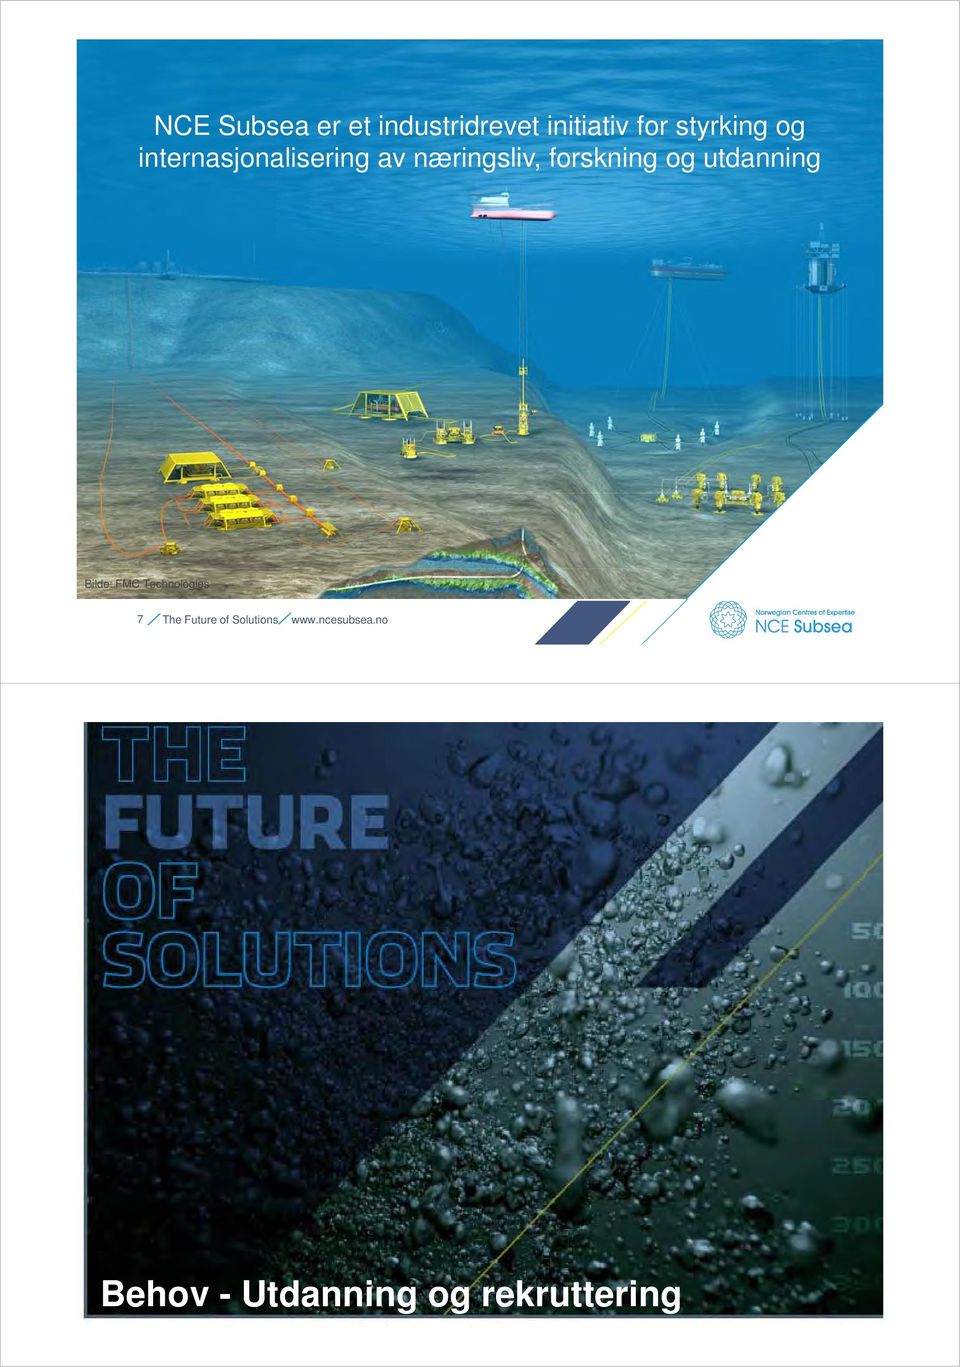 Bilde: FMC Technologies 7 The Future of Solutions www.ncesubsea.